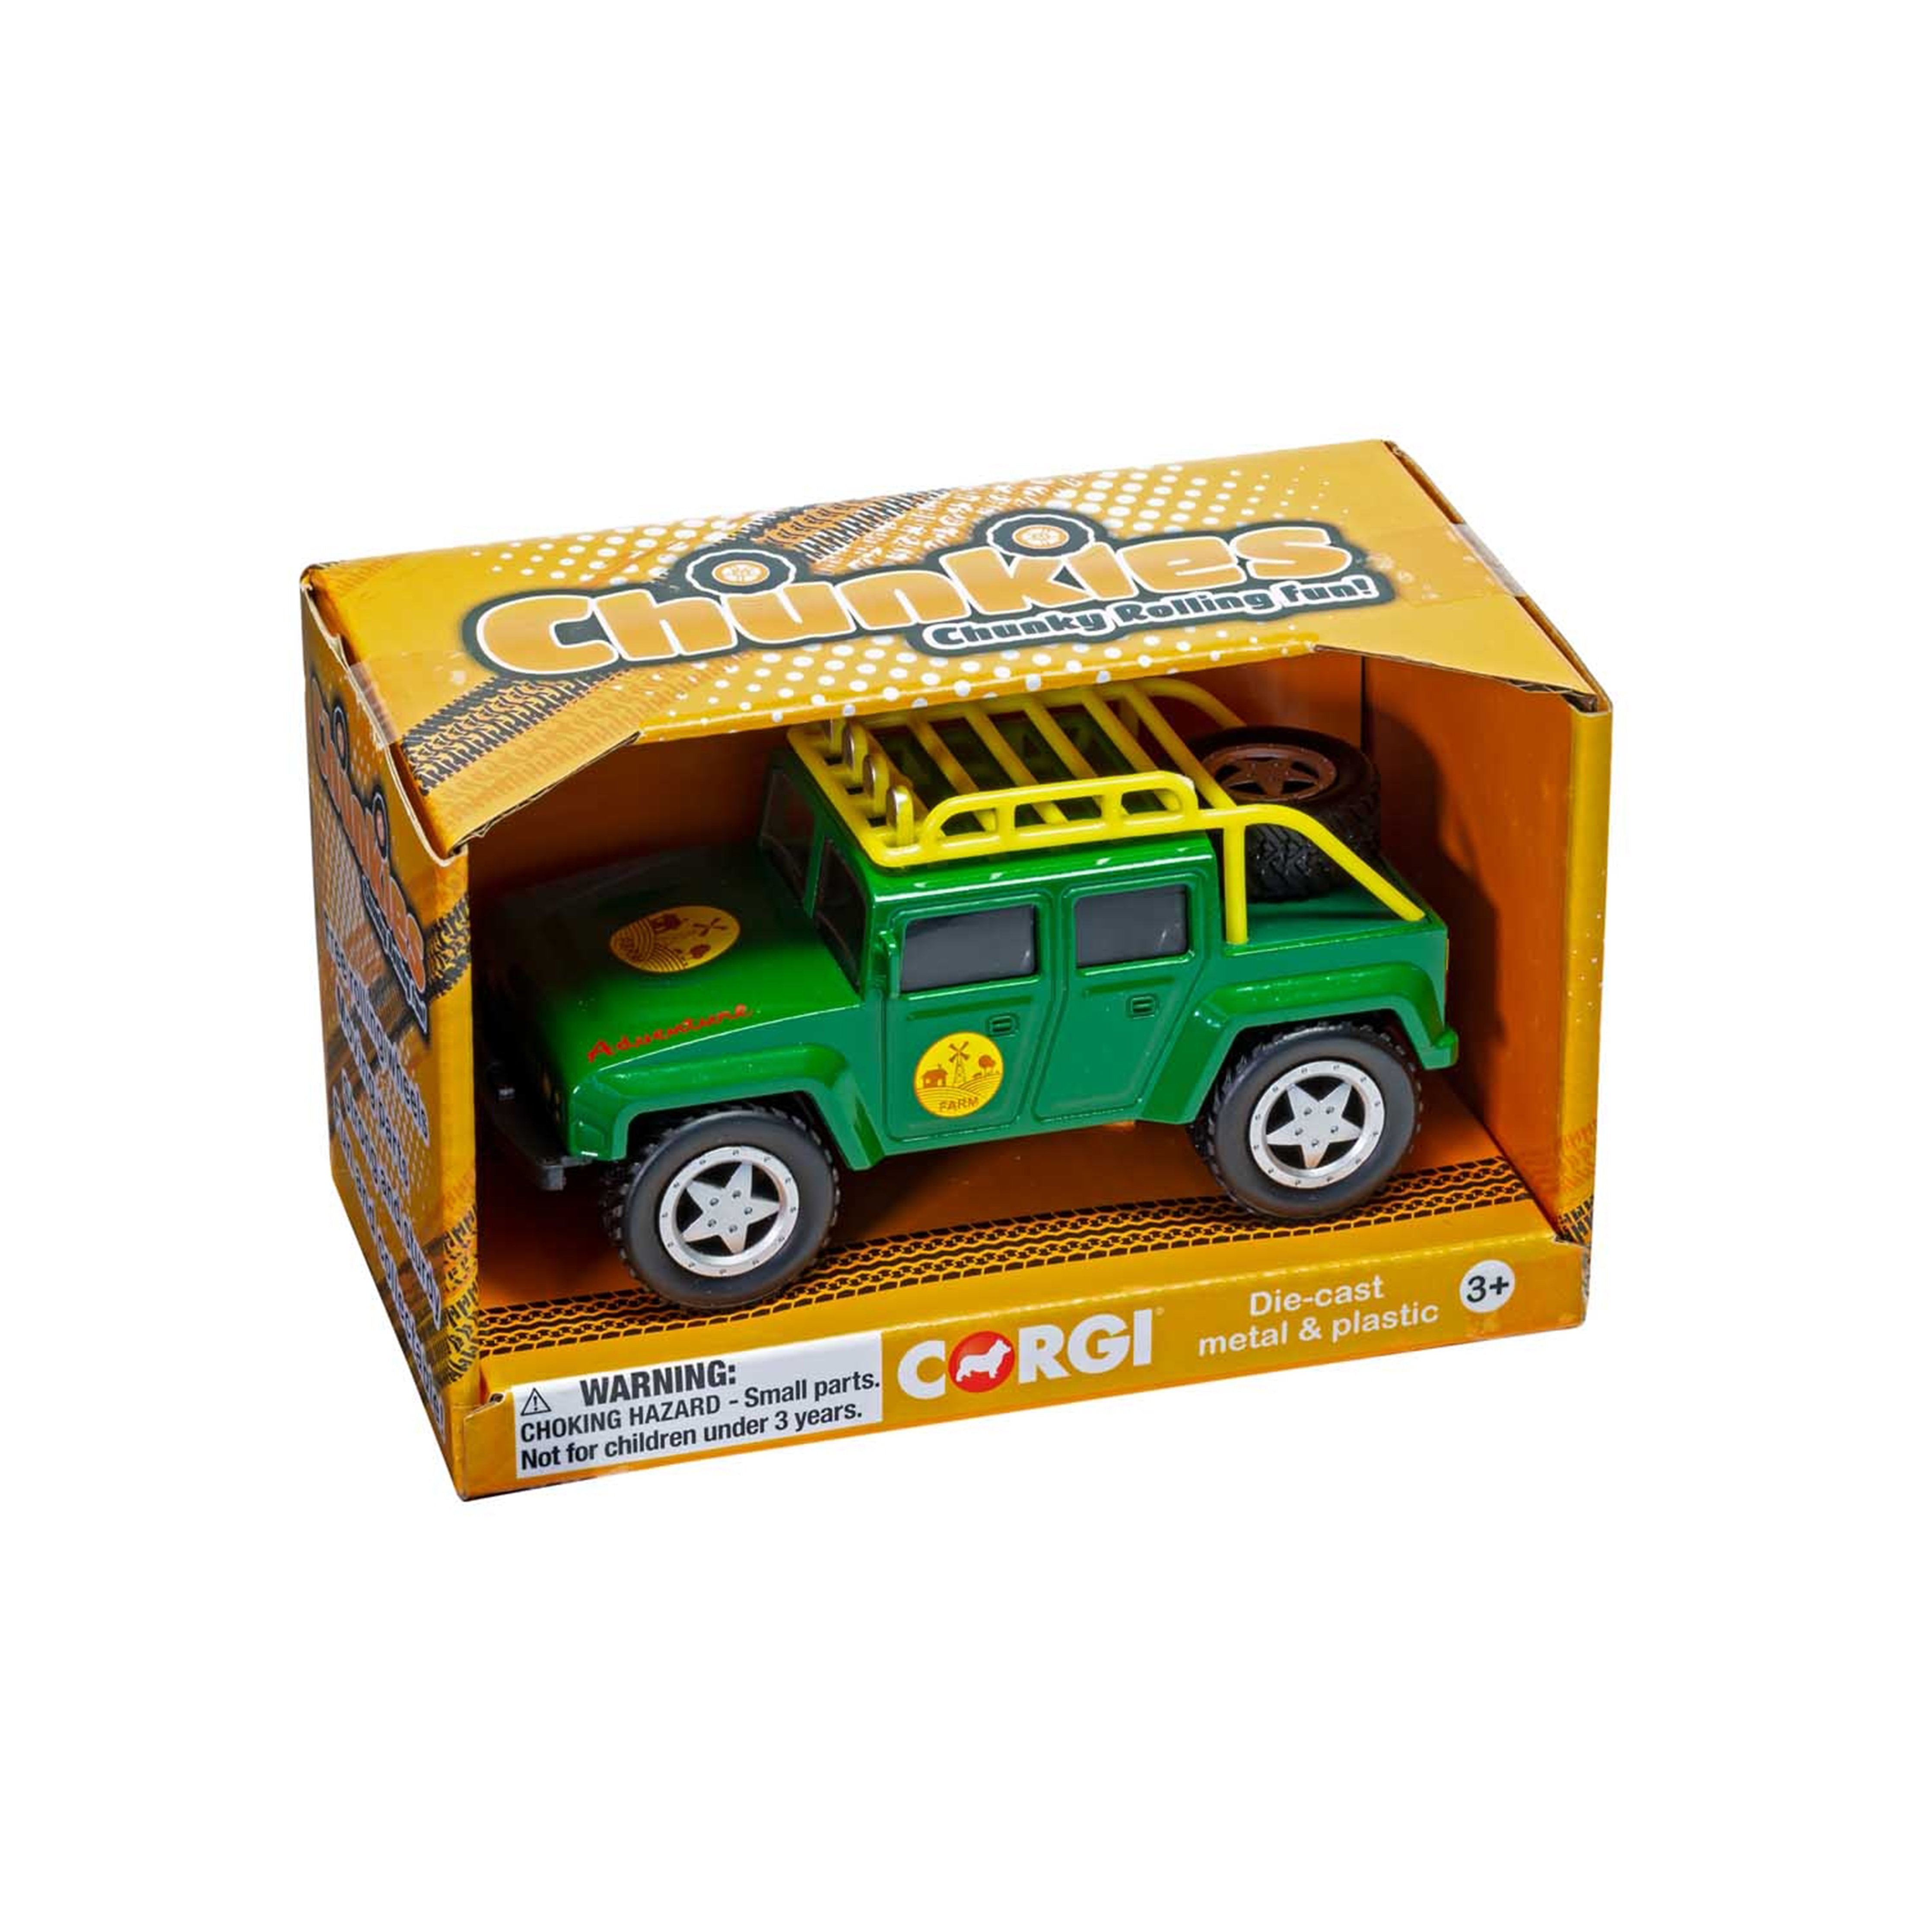 Corgi CHUNKIES CH074 Farm Truck Diecast and Plastic Toy